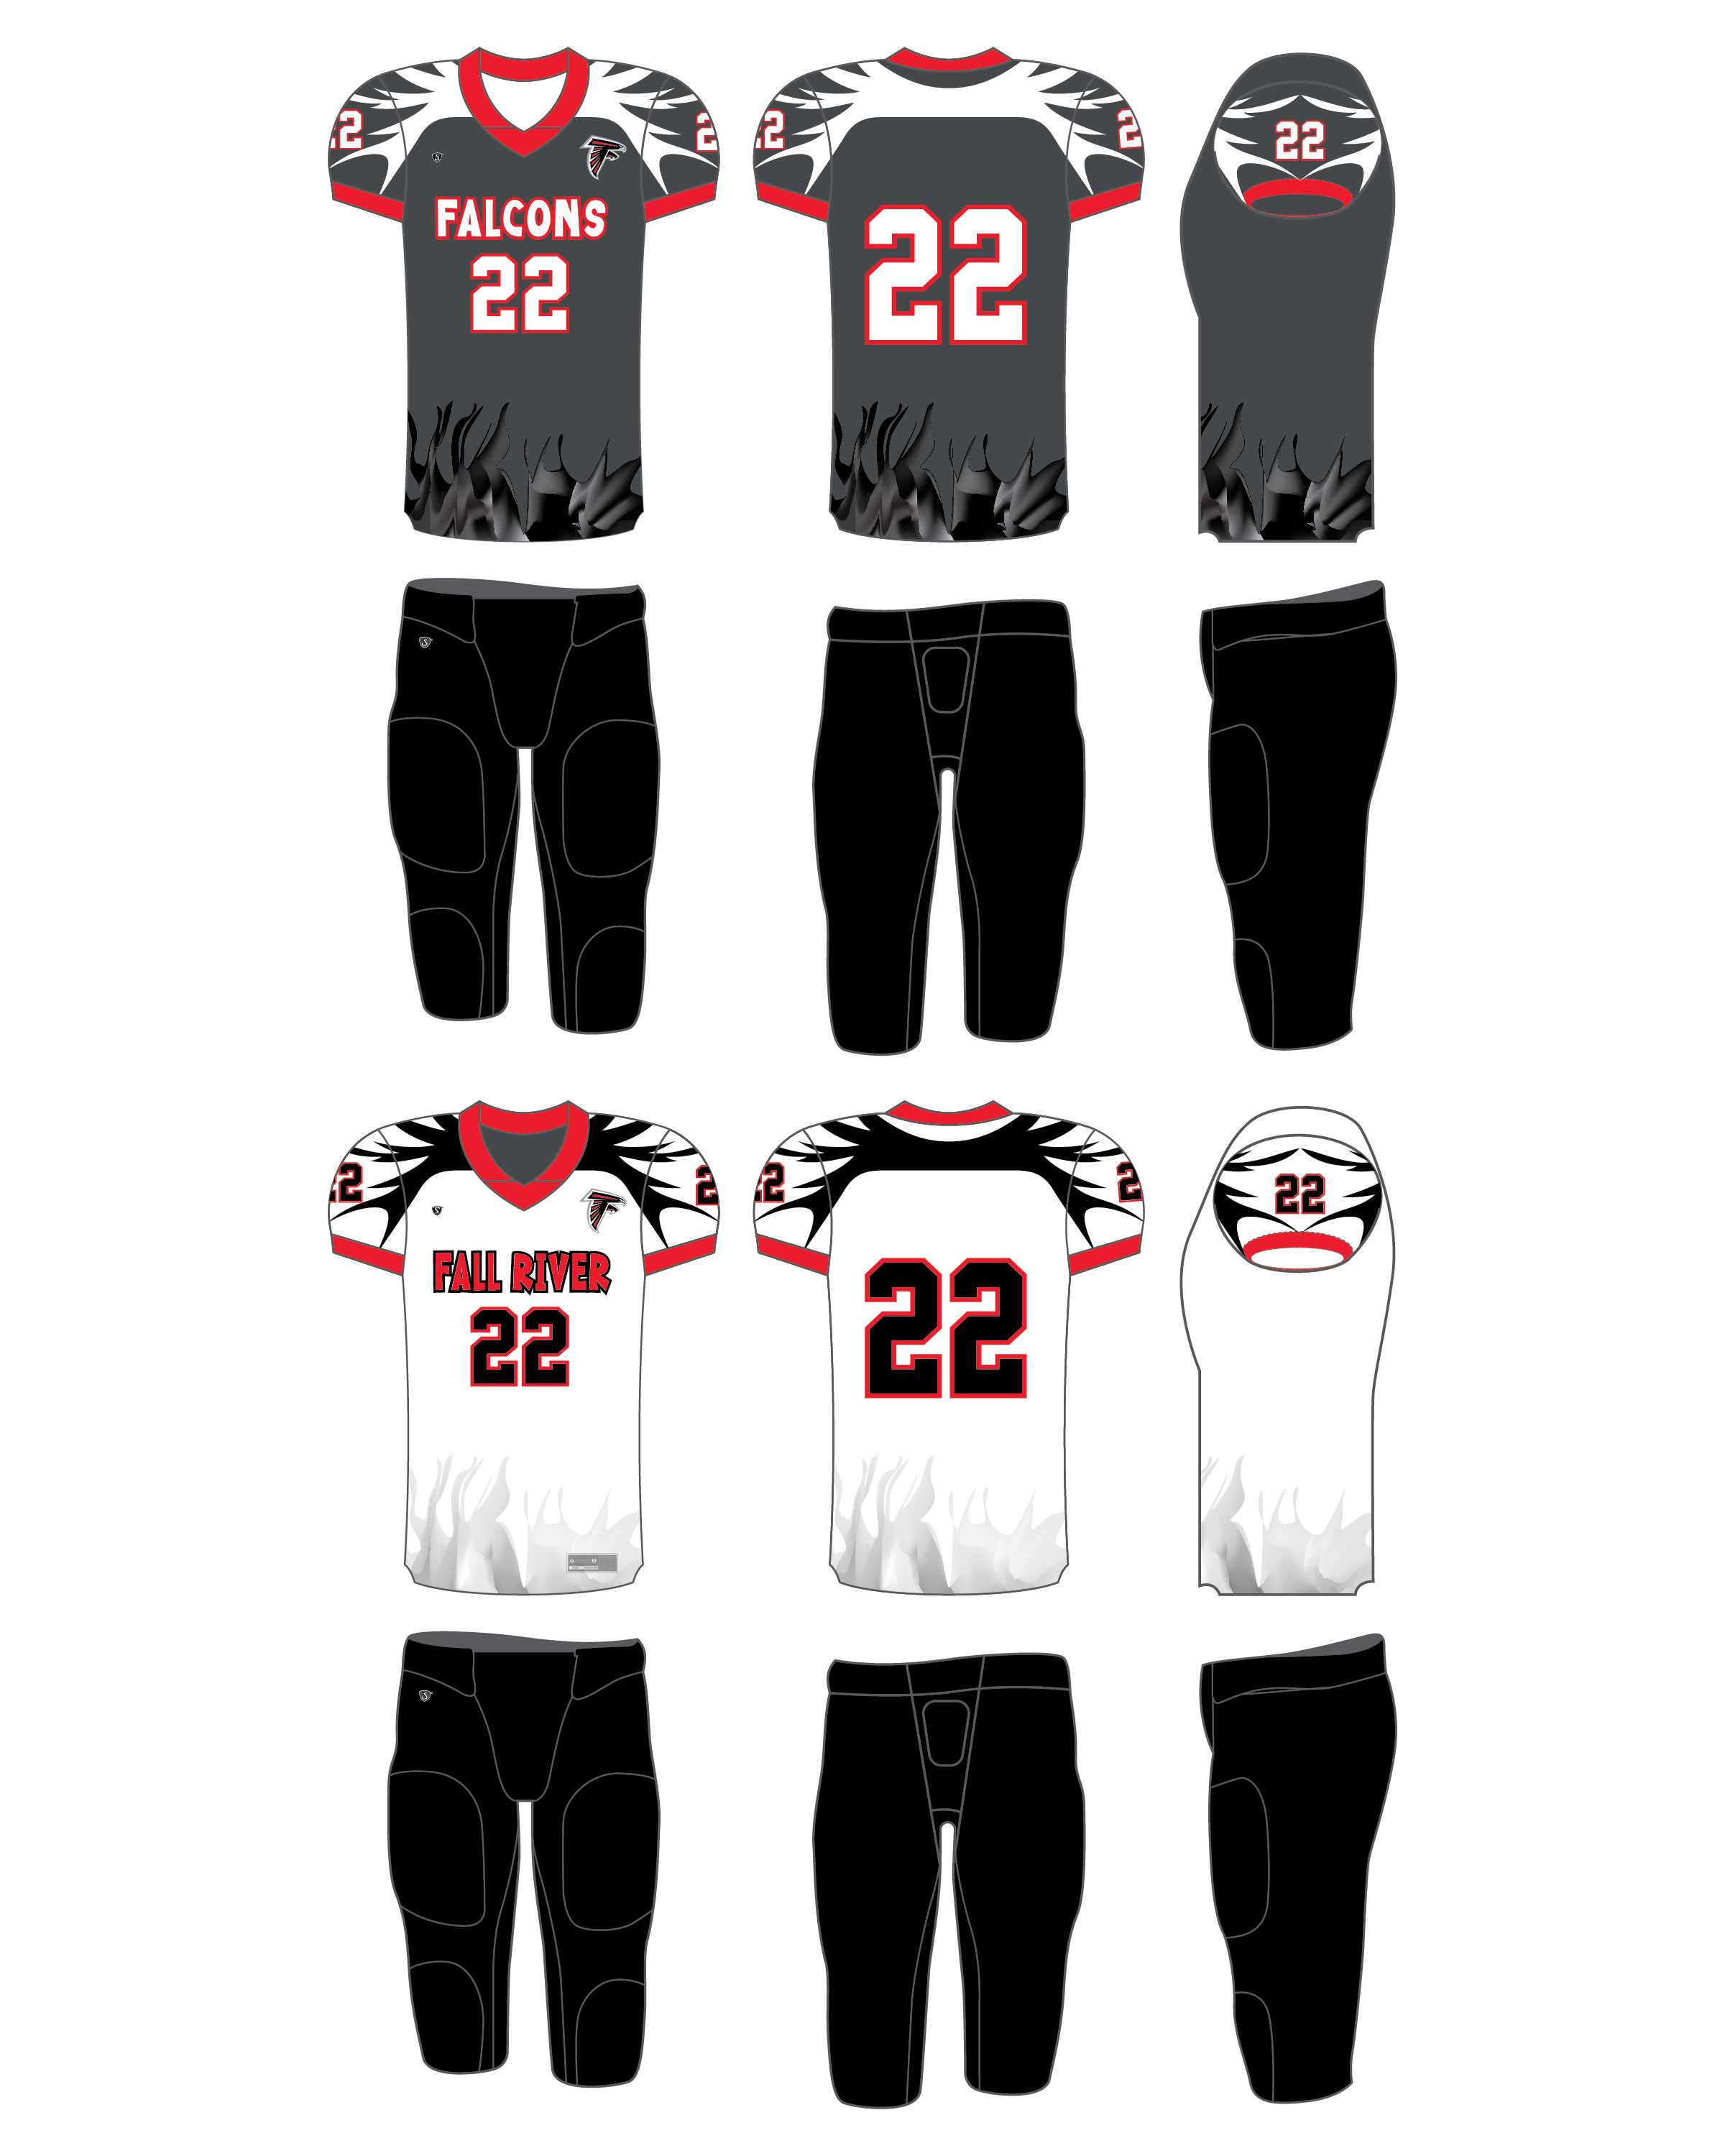 Custom Sublimated Football Uniform - Fall River 5